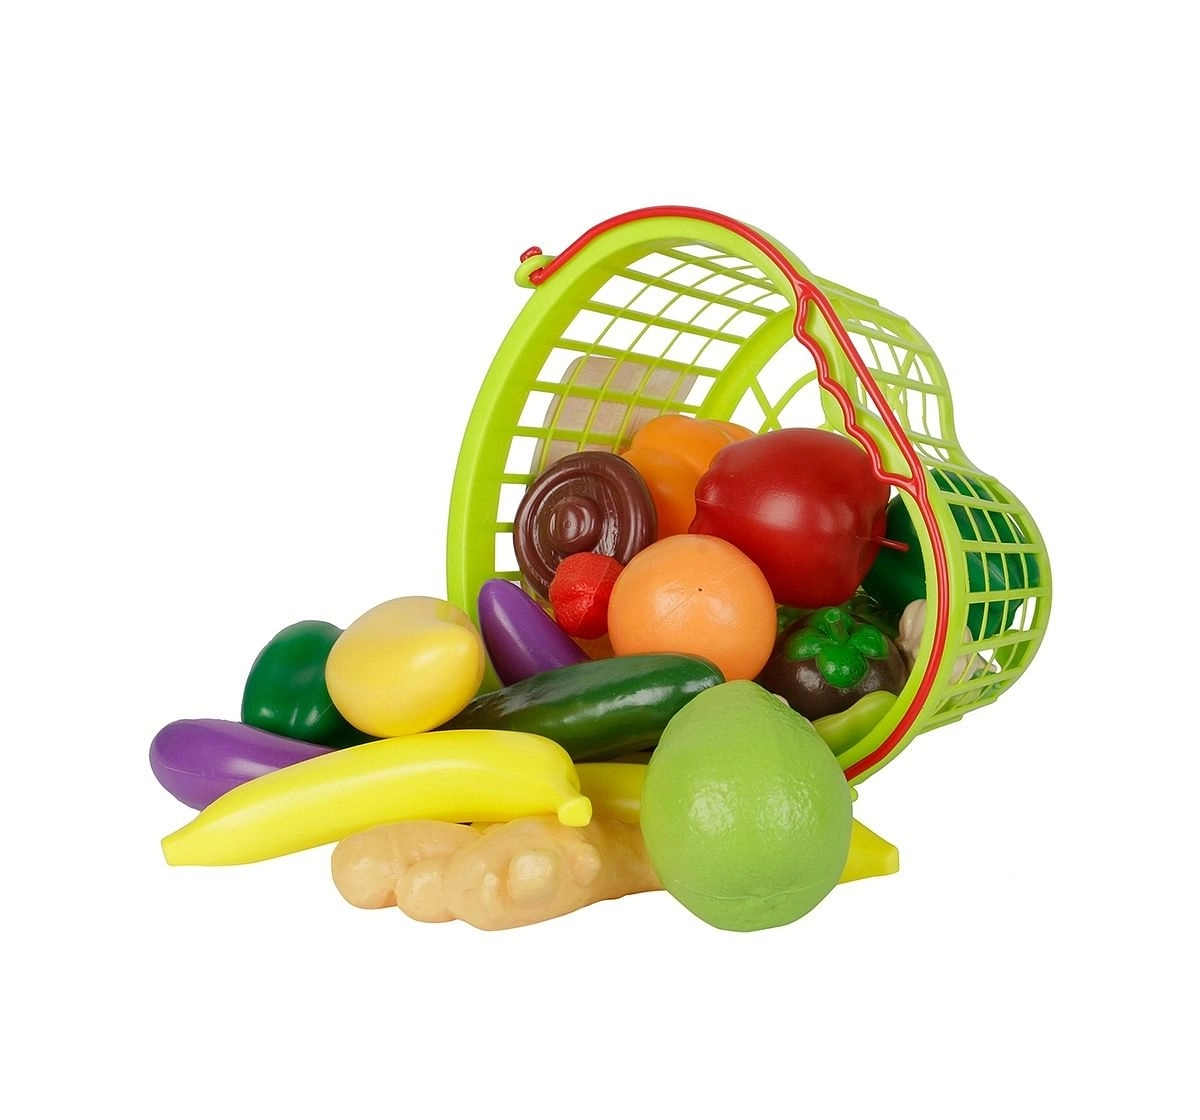 Comdaq Heart Shaped Vegetable Basket Playset for age 3Y+ 